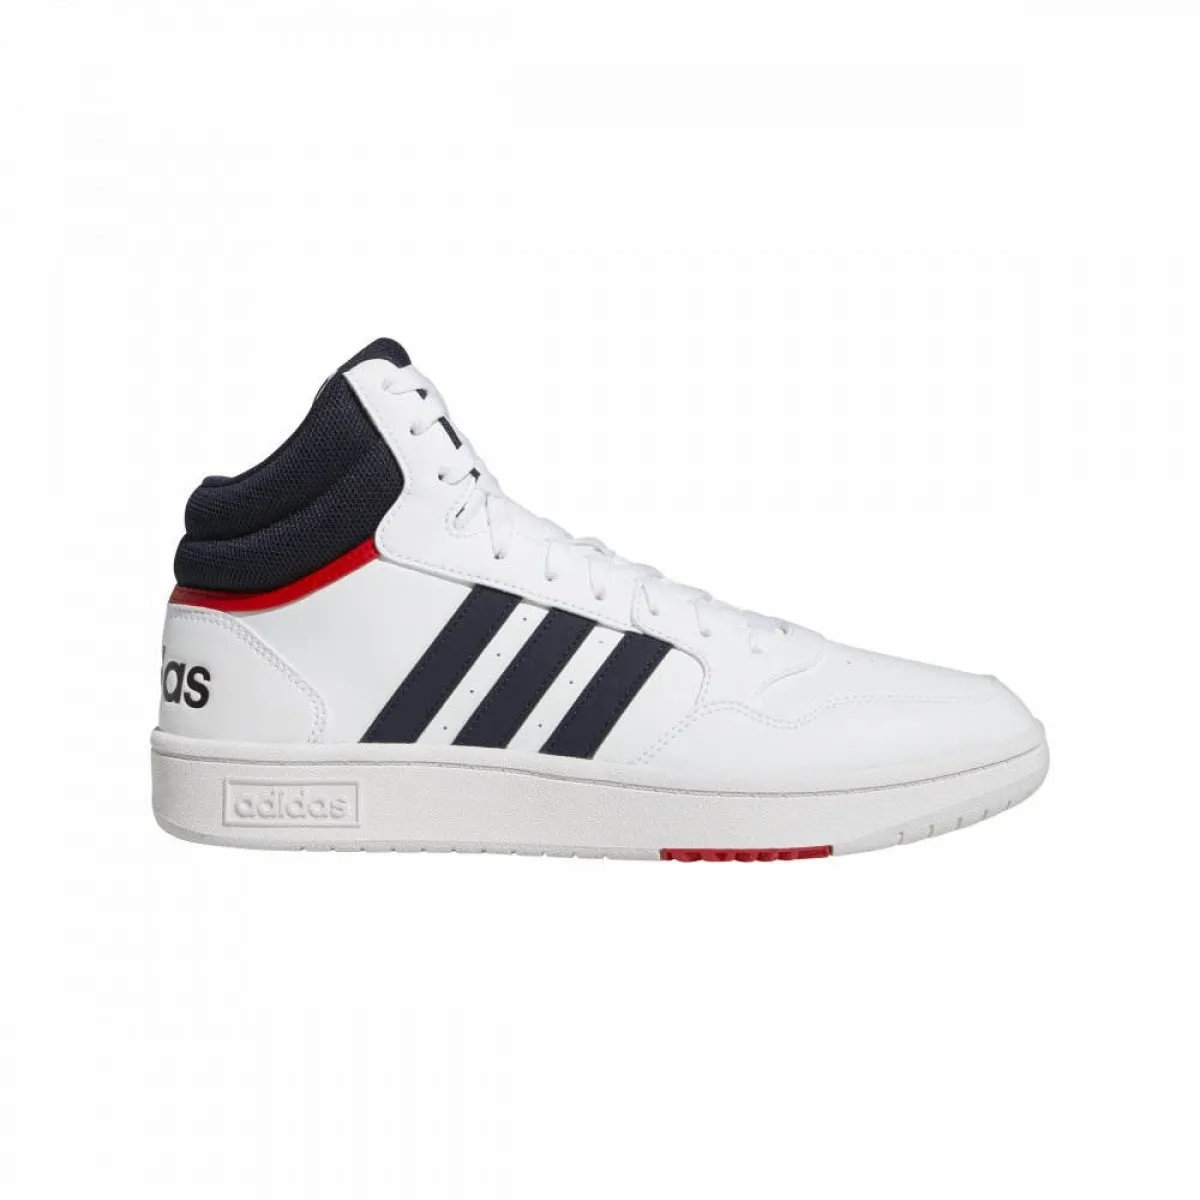 adidas sportschoen HOOPS 3.0 MID wit zwart rood 12-adiGY5543